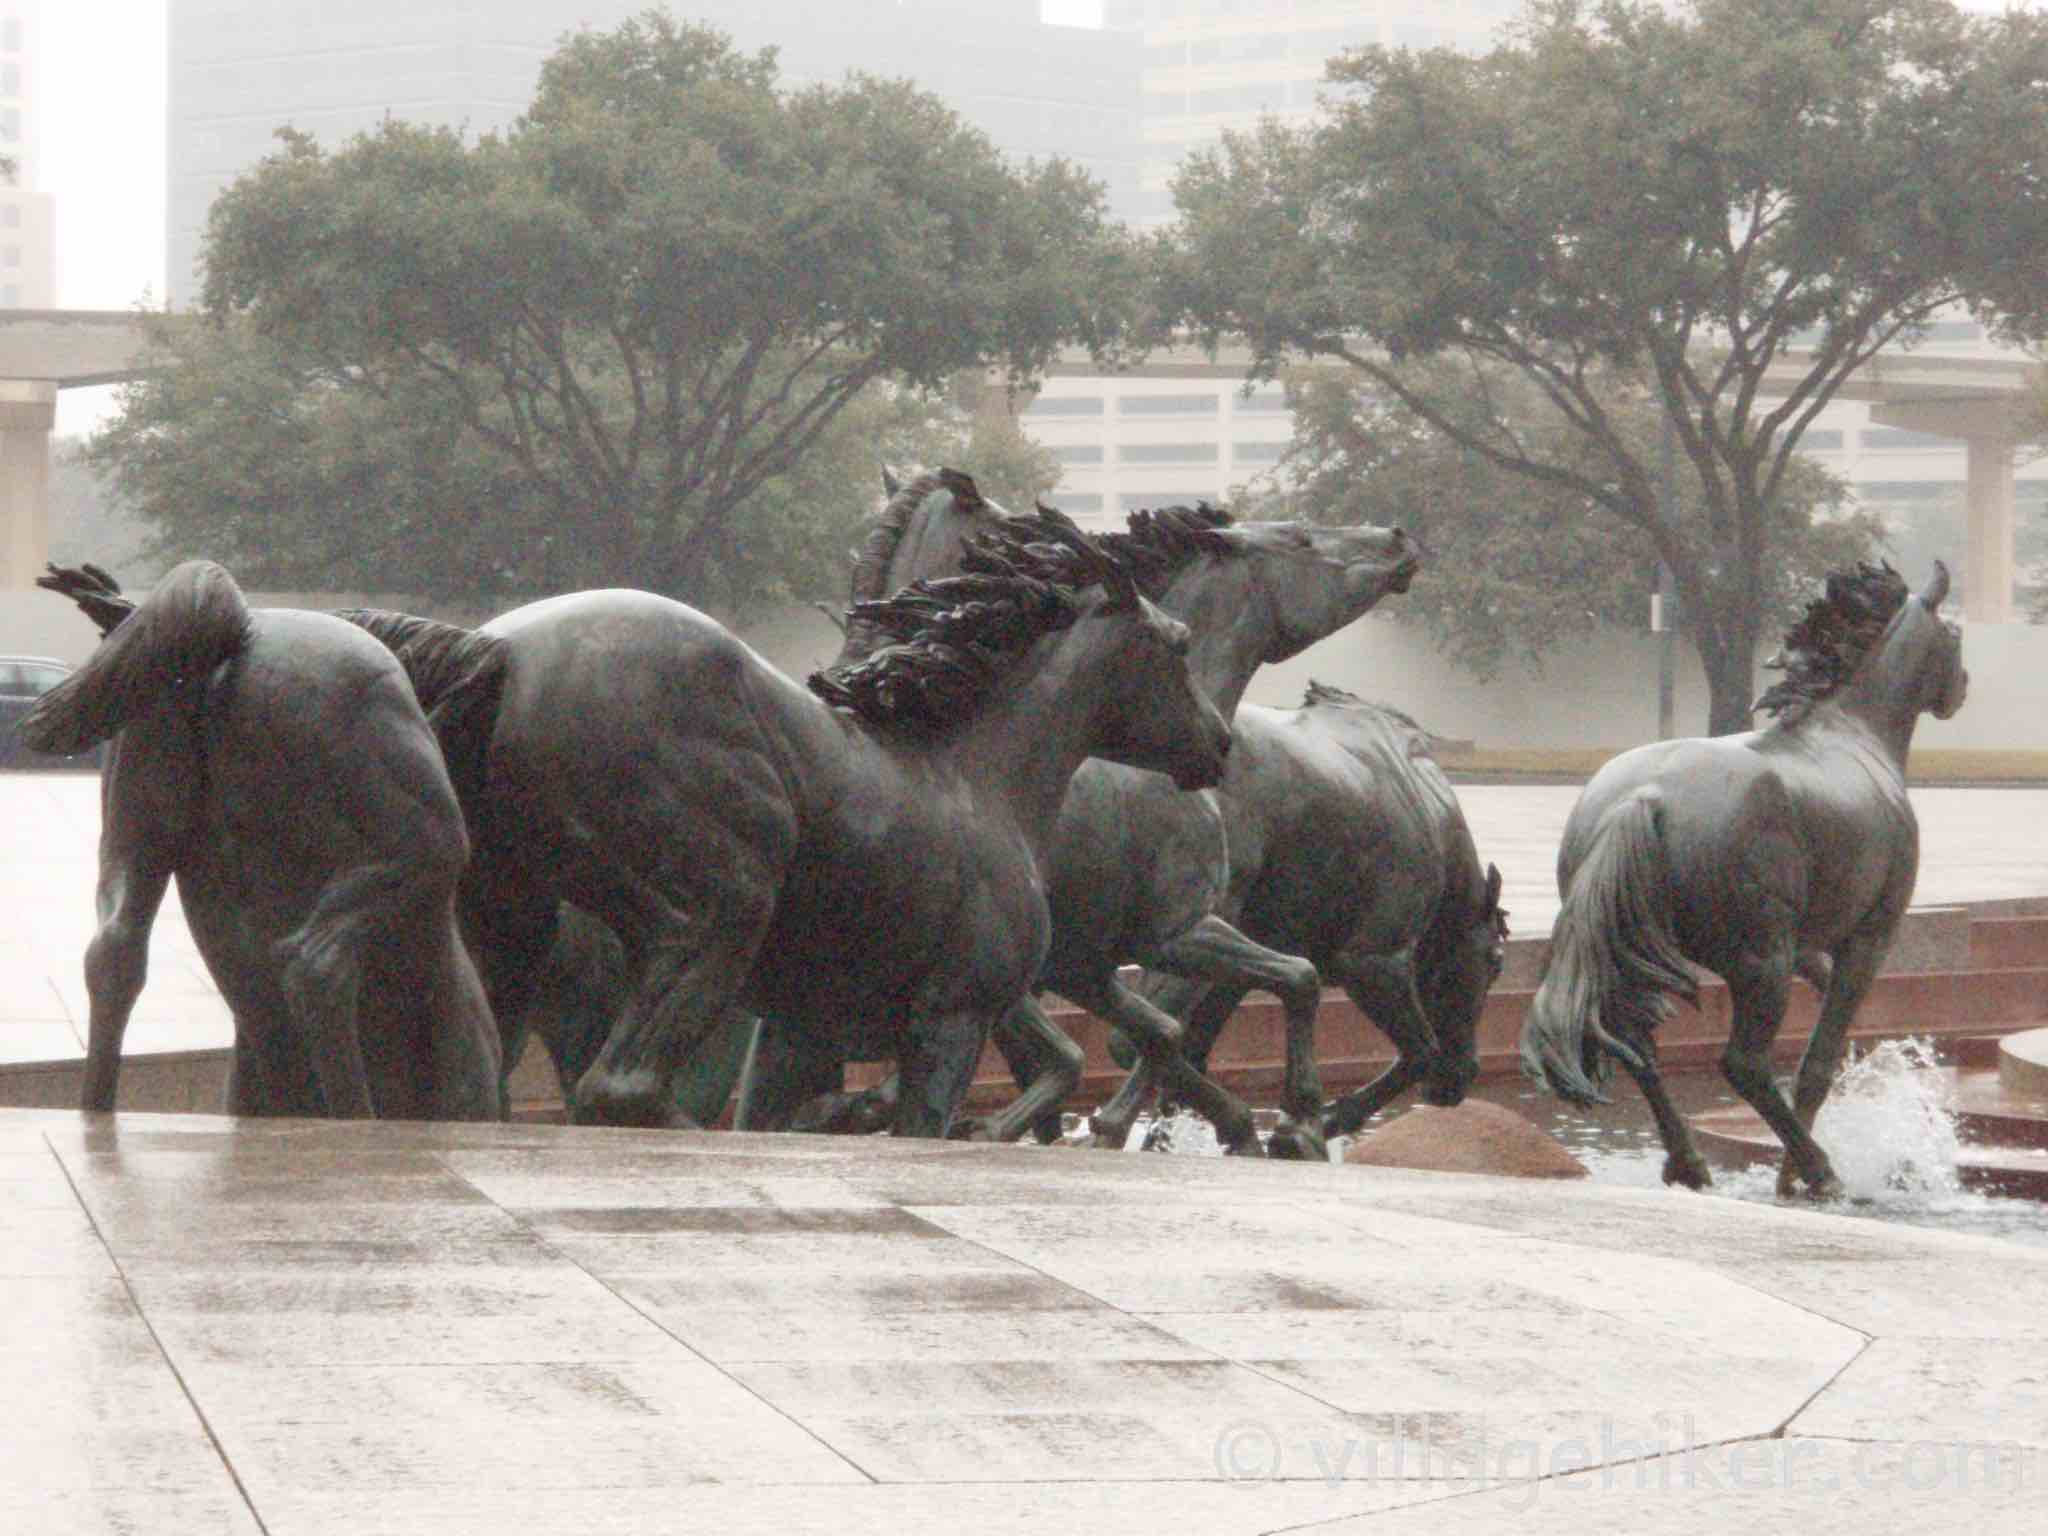 bronze mustangs splash through the fountain in a heavy rain.